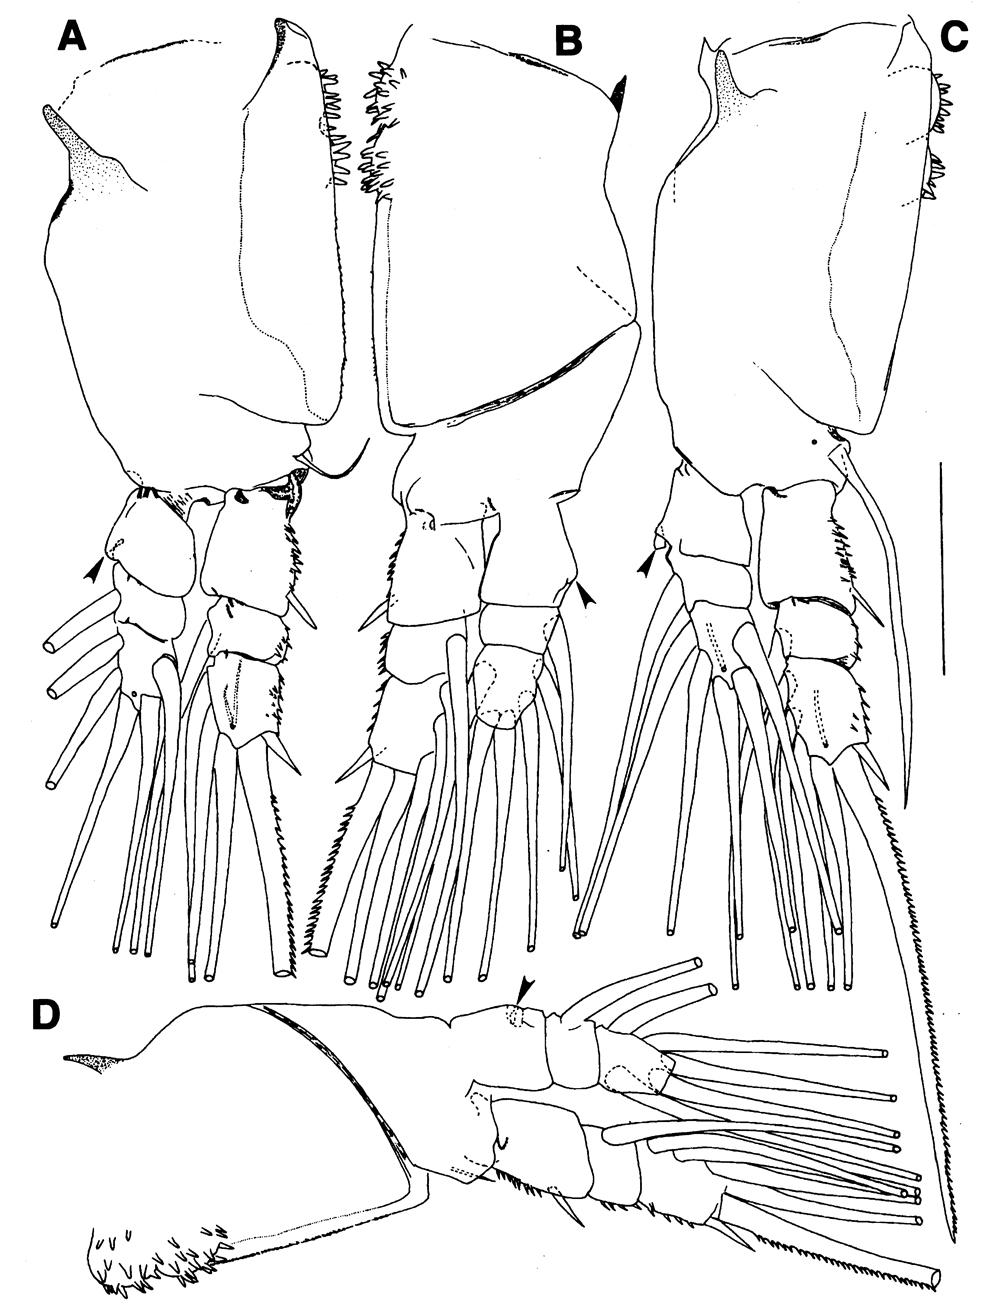 Espce Maemonstrilla spinicoxa - Planche 4 de figures morphologiques